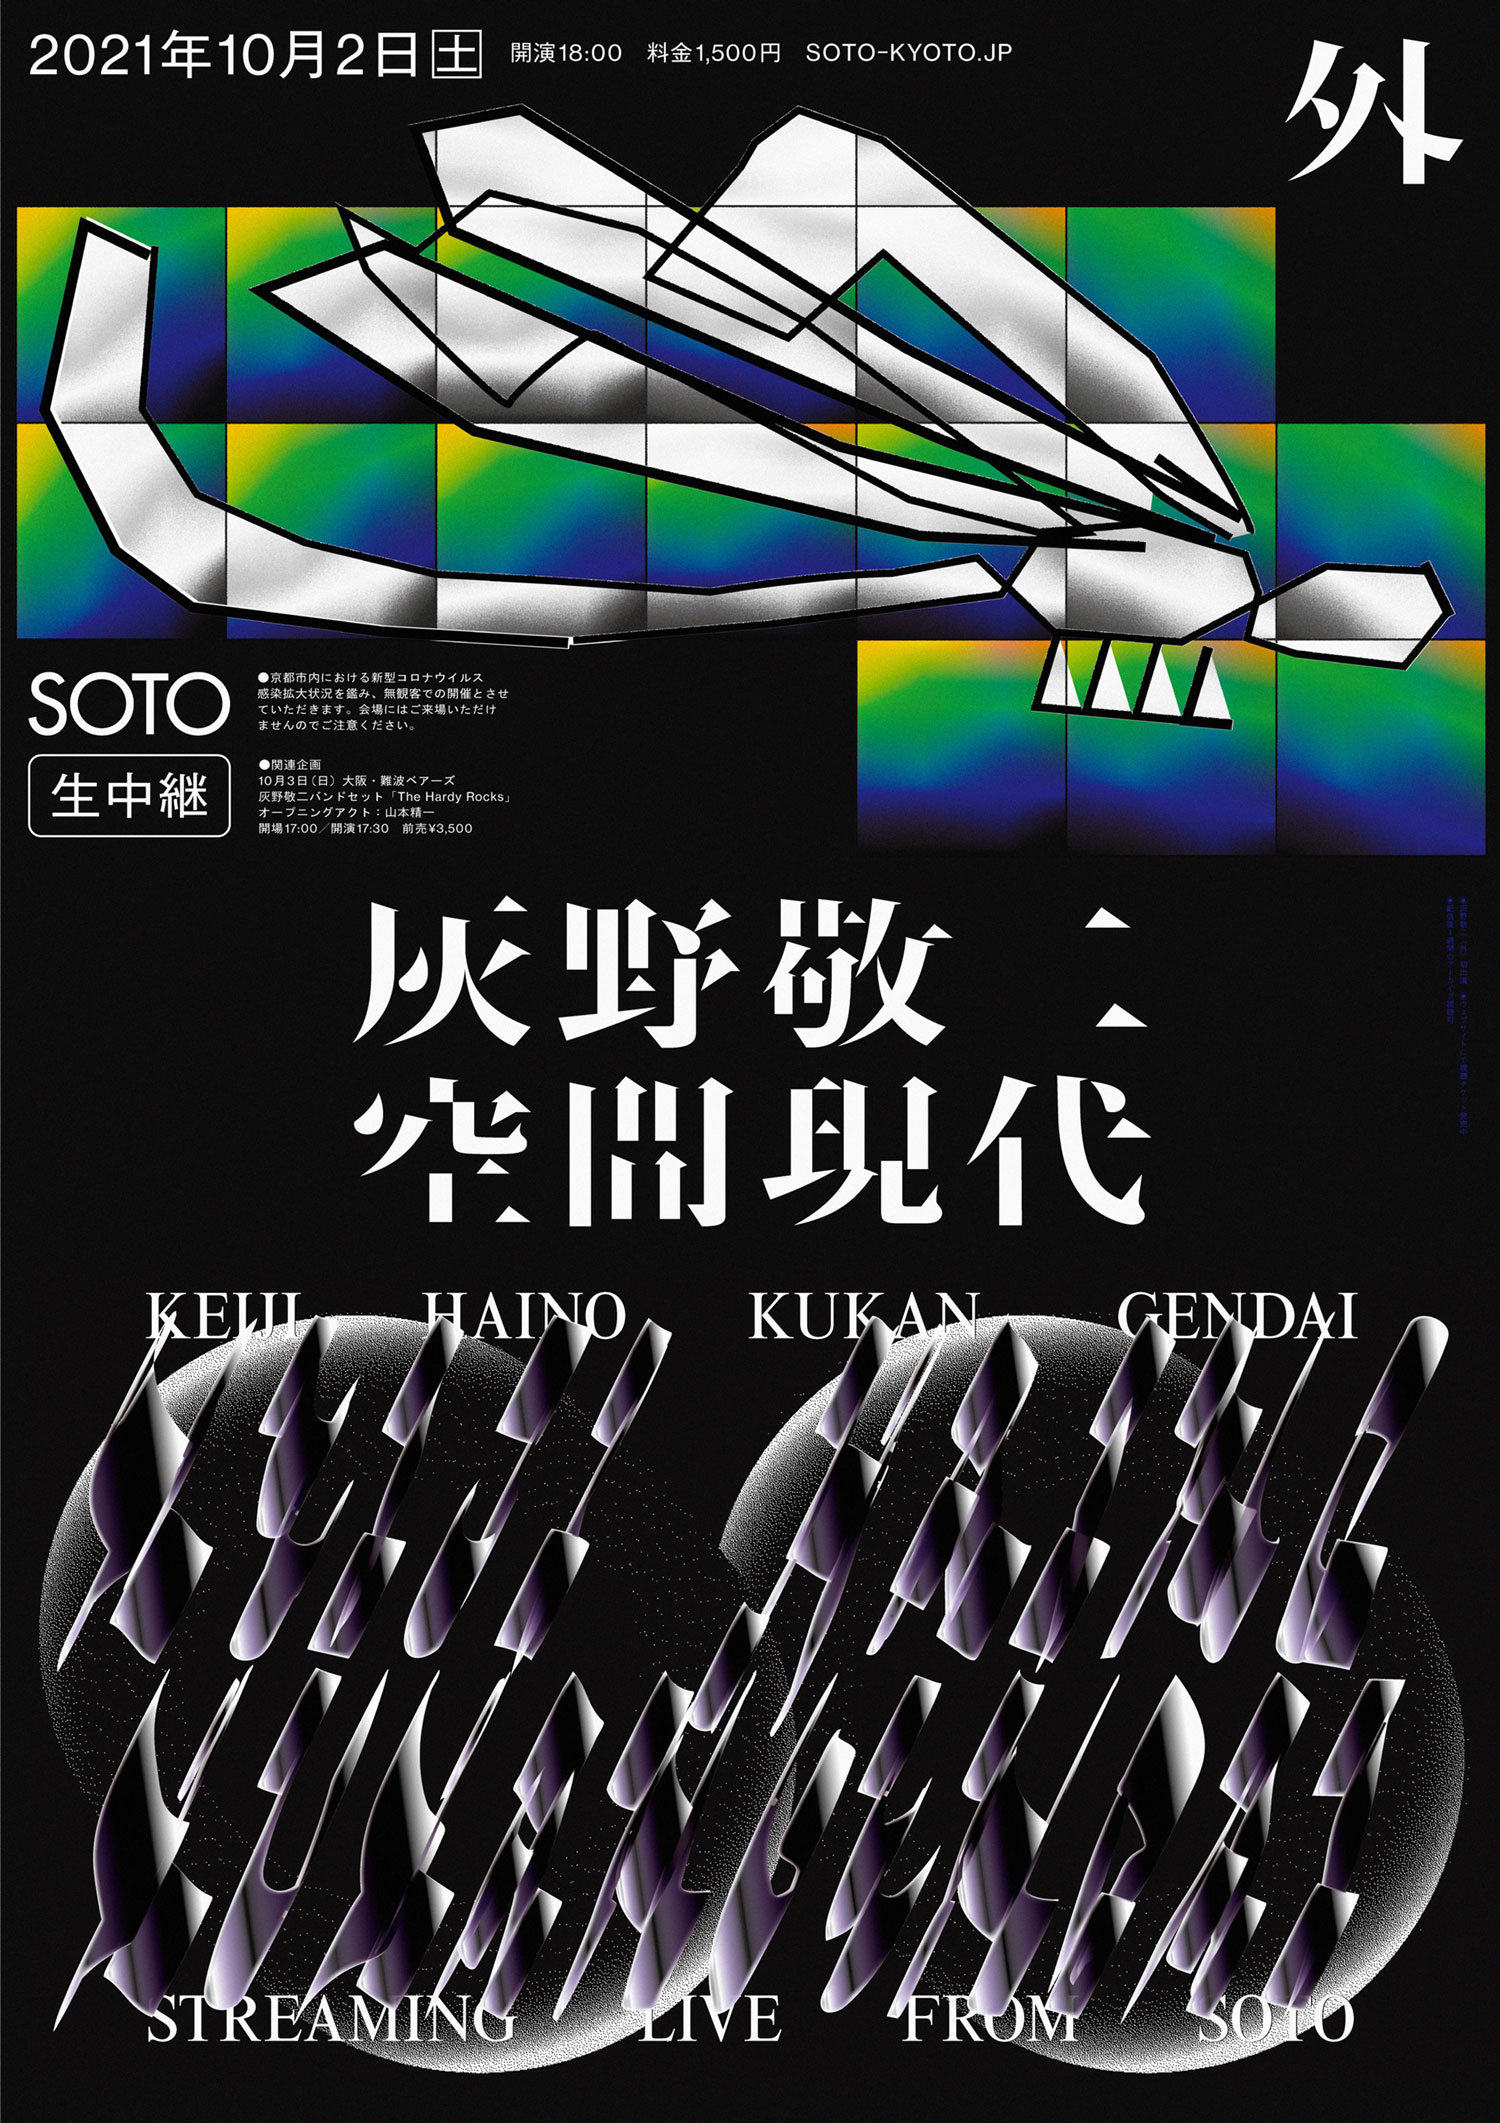 Keiji Haino streaming live from Soto alongside Kyoto’s power trio Kukangendai